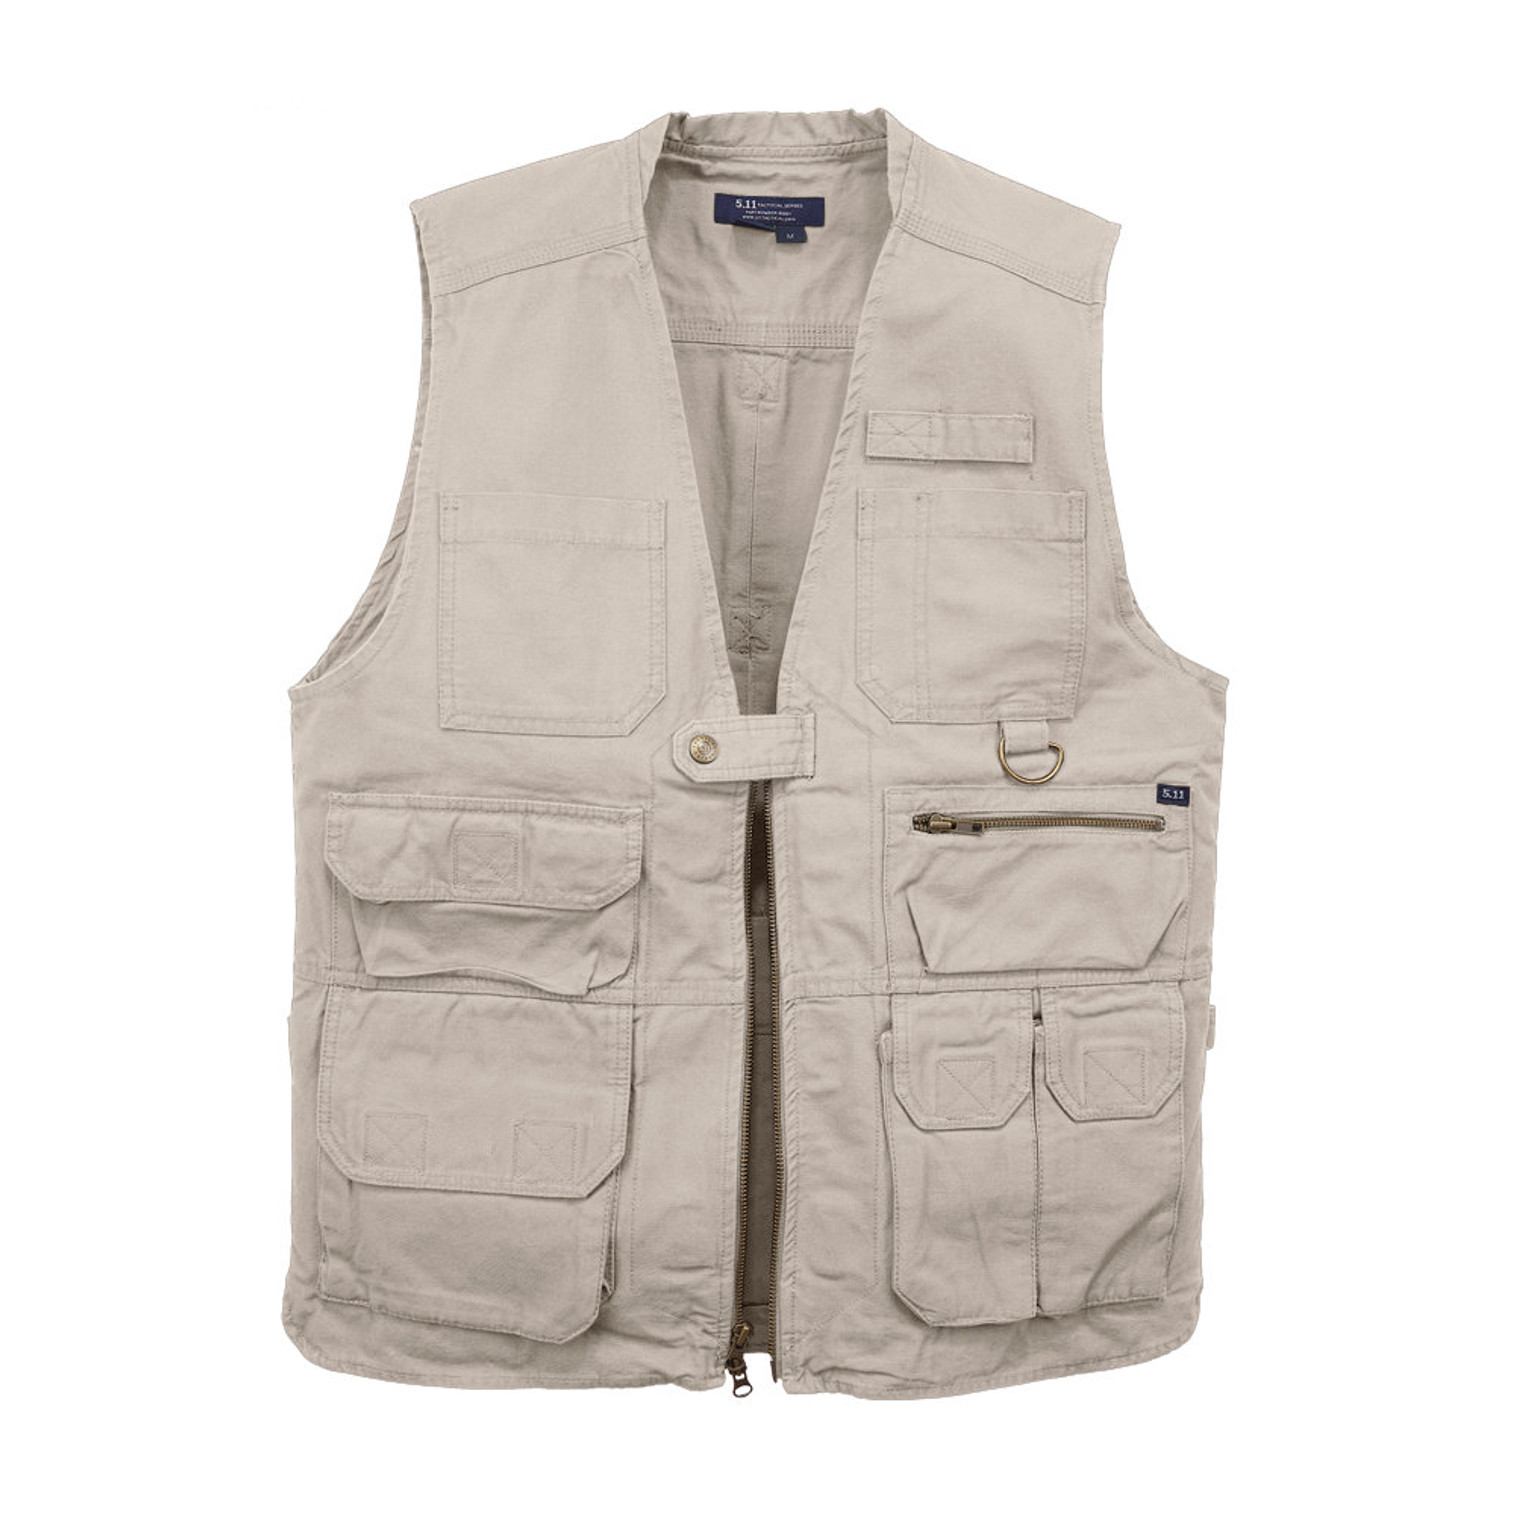 5.11 Tactical Vest - Khaki